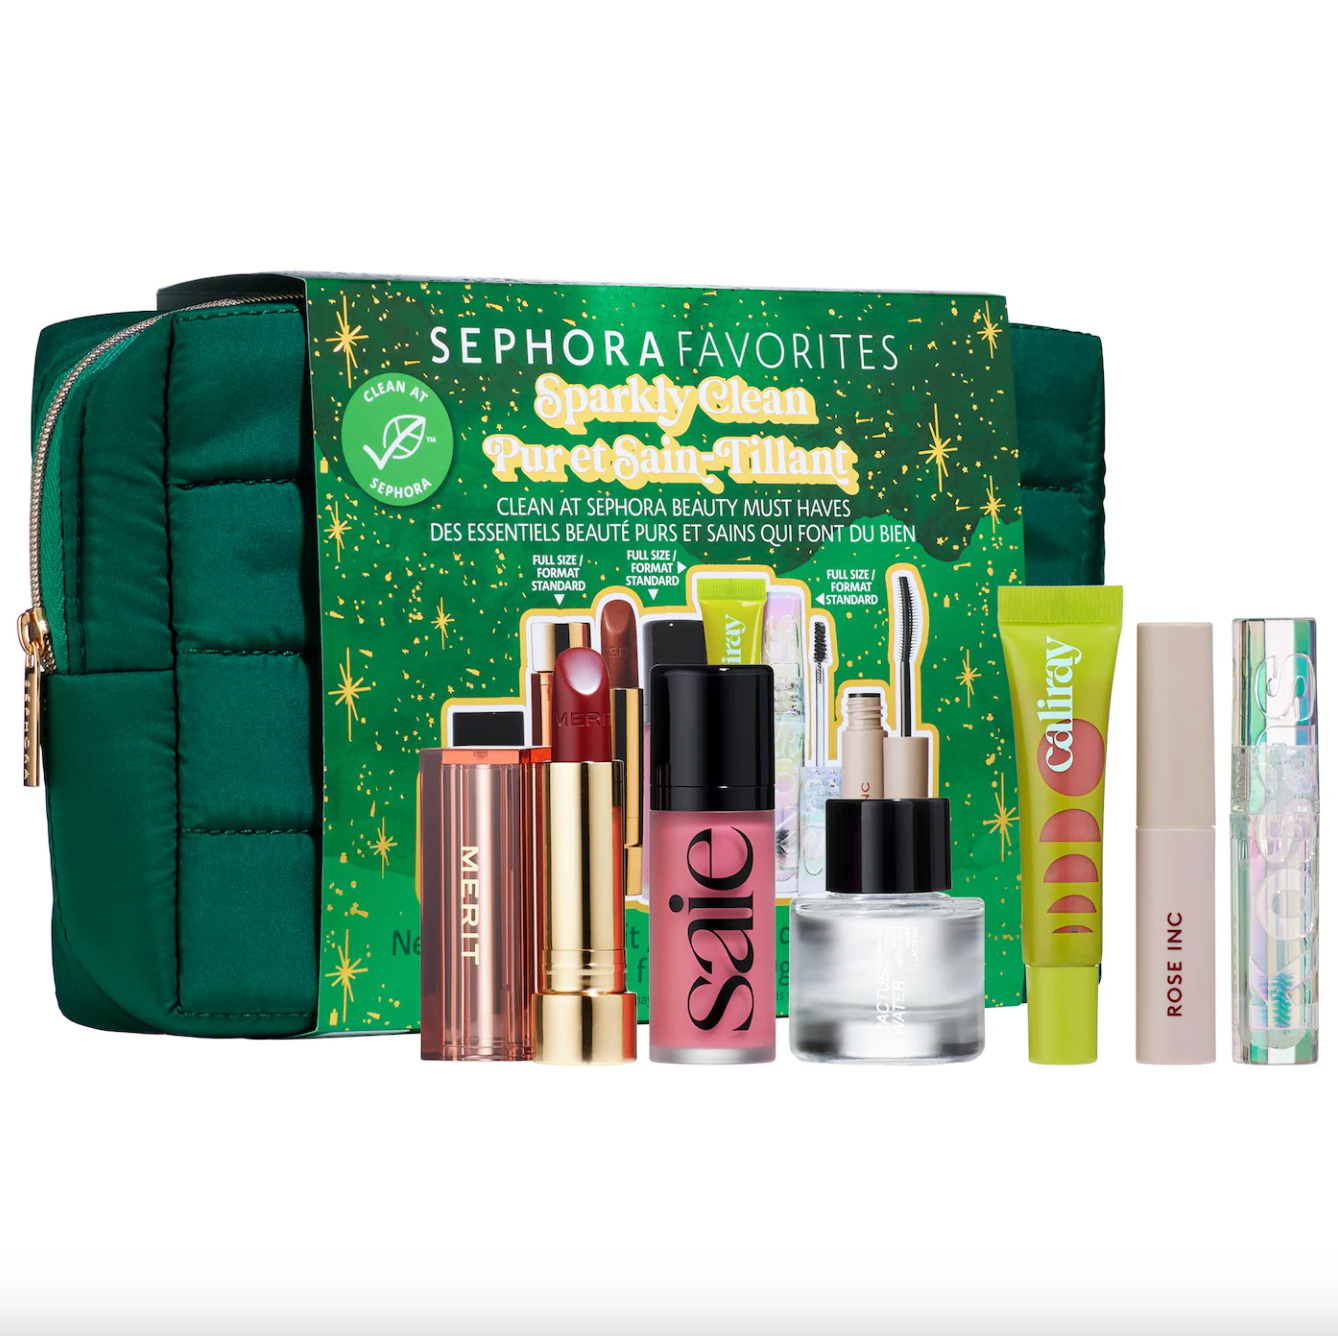 The Best Sephora Favorites Perfume Sampler 2023 - All the Details